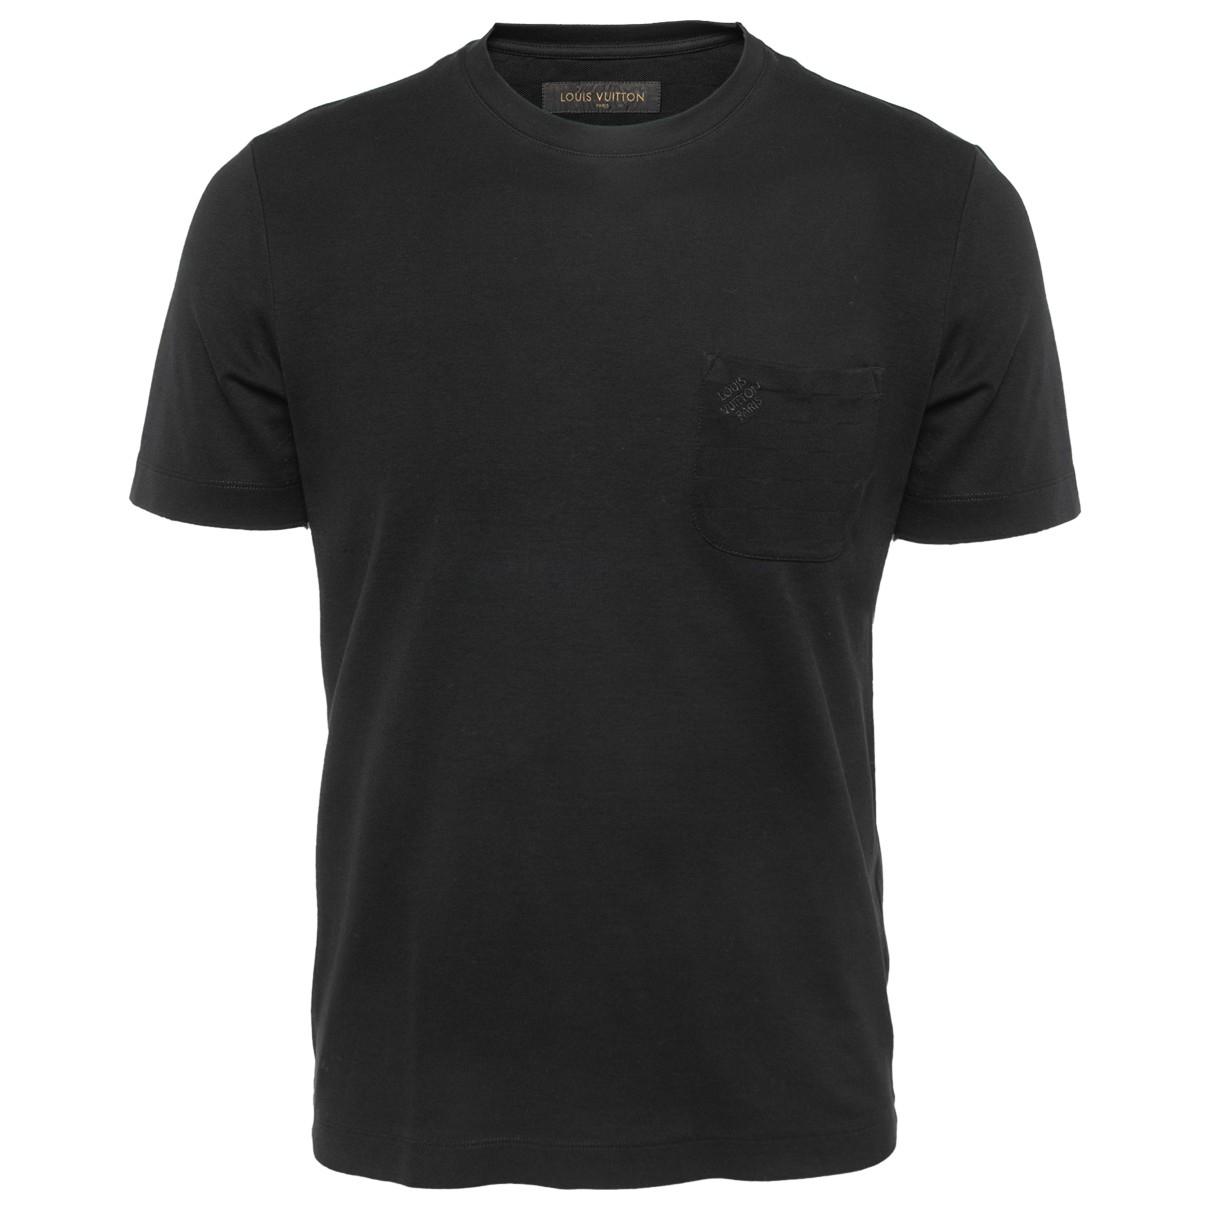 Buy Cheap Louis Vuitton T-Shirts for MEN #9999924353 from